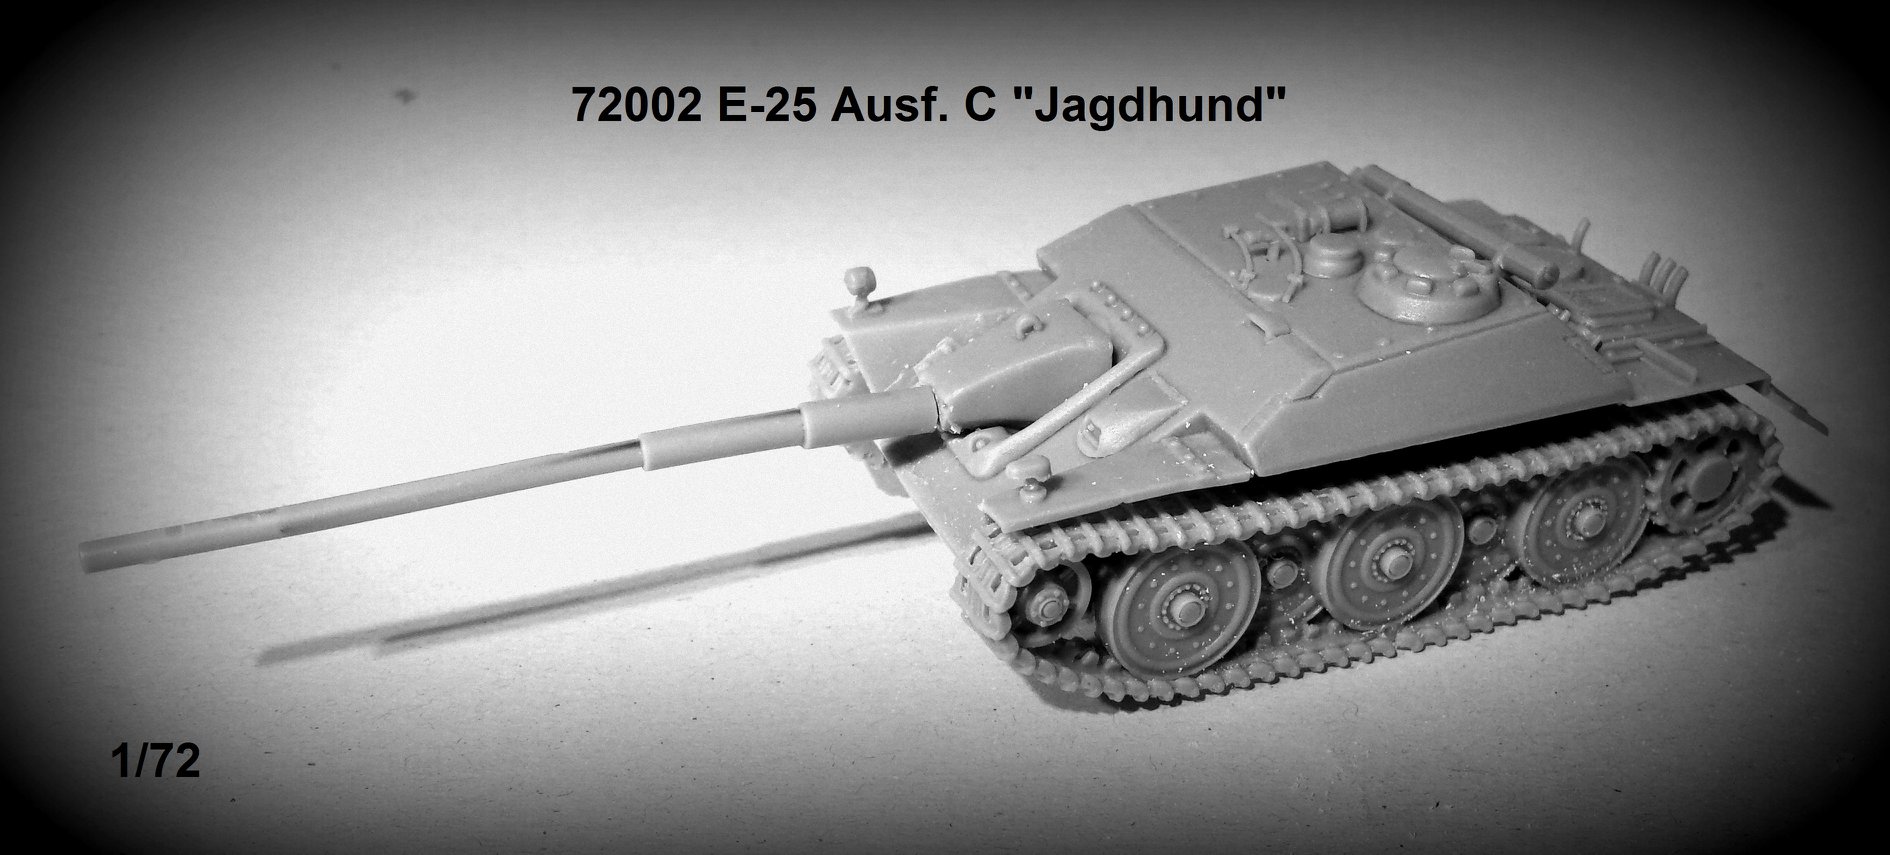 E-25 Ausf.C Jagdhund